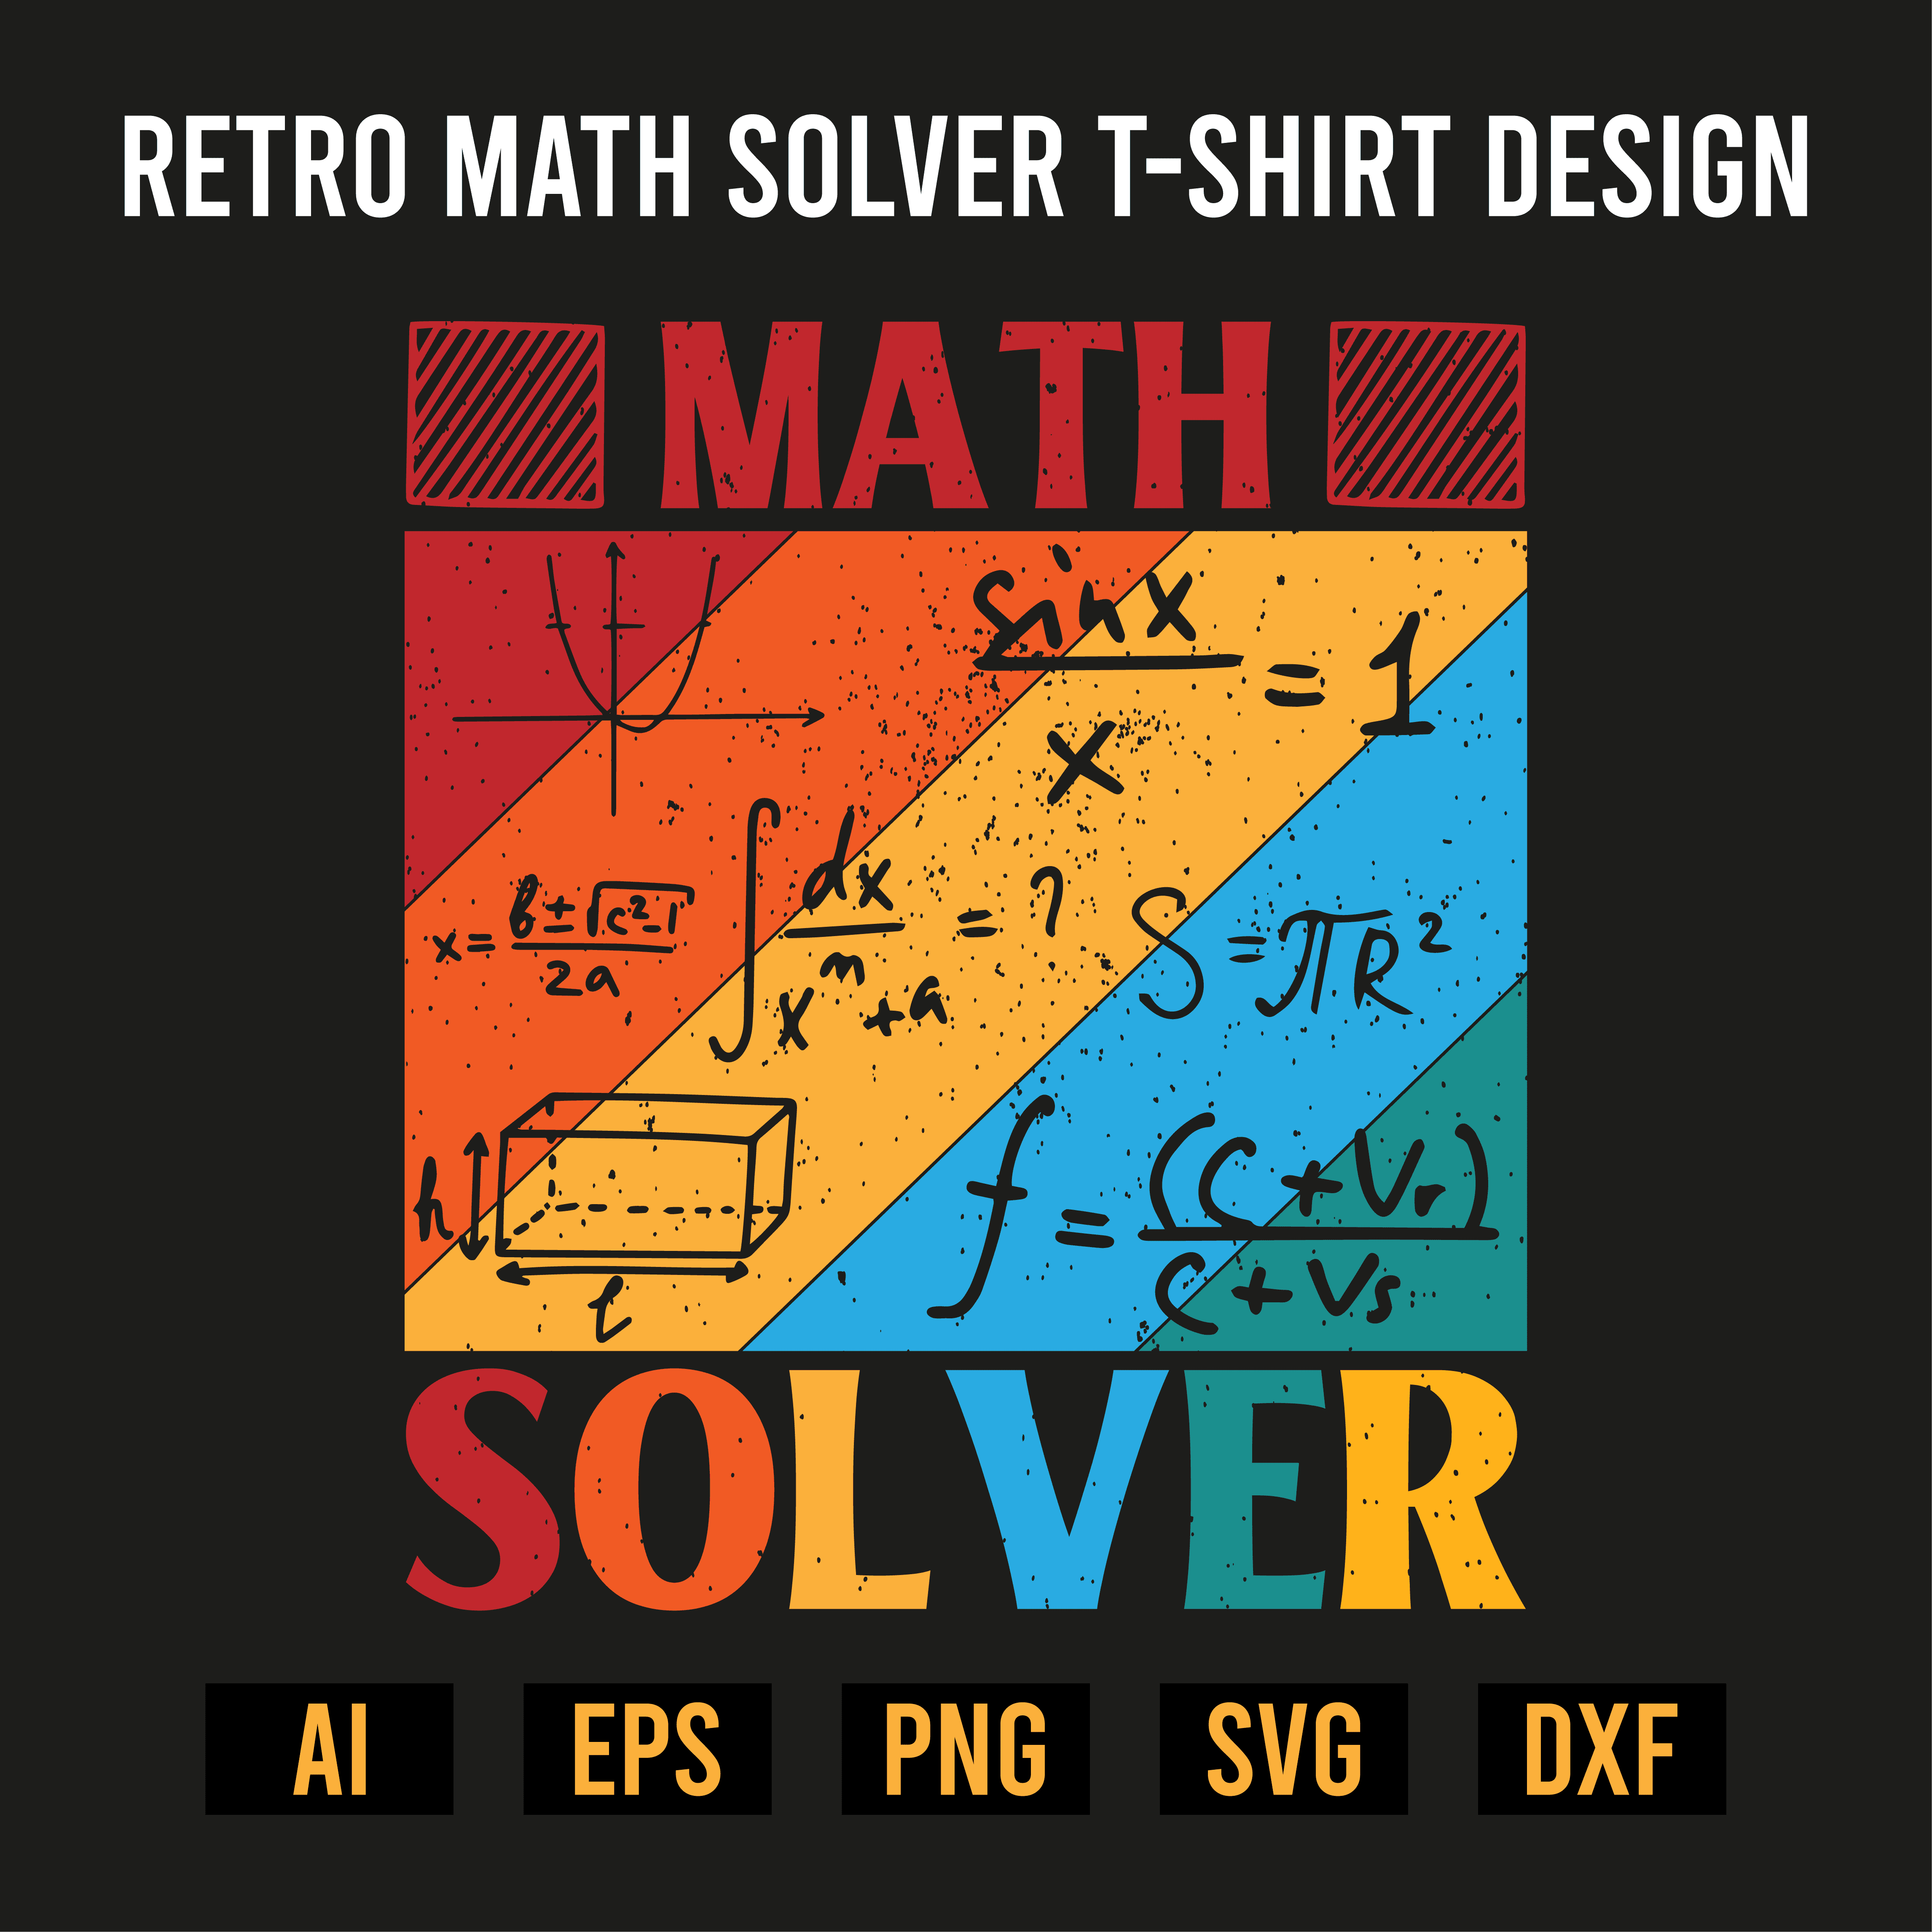 T-Shirt Math Solver Design cover image.